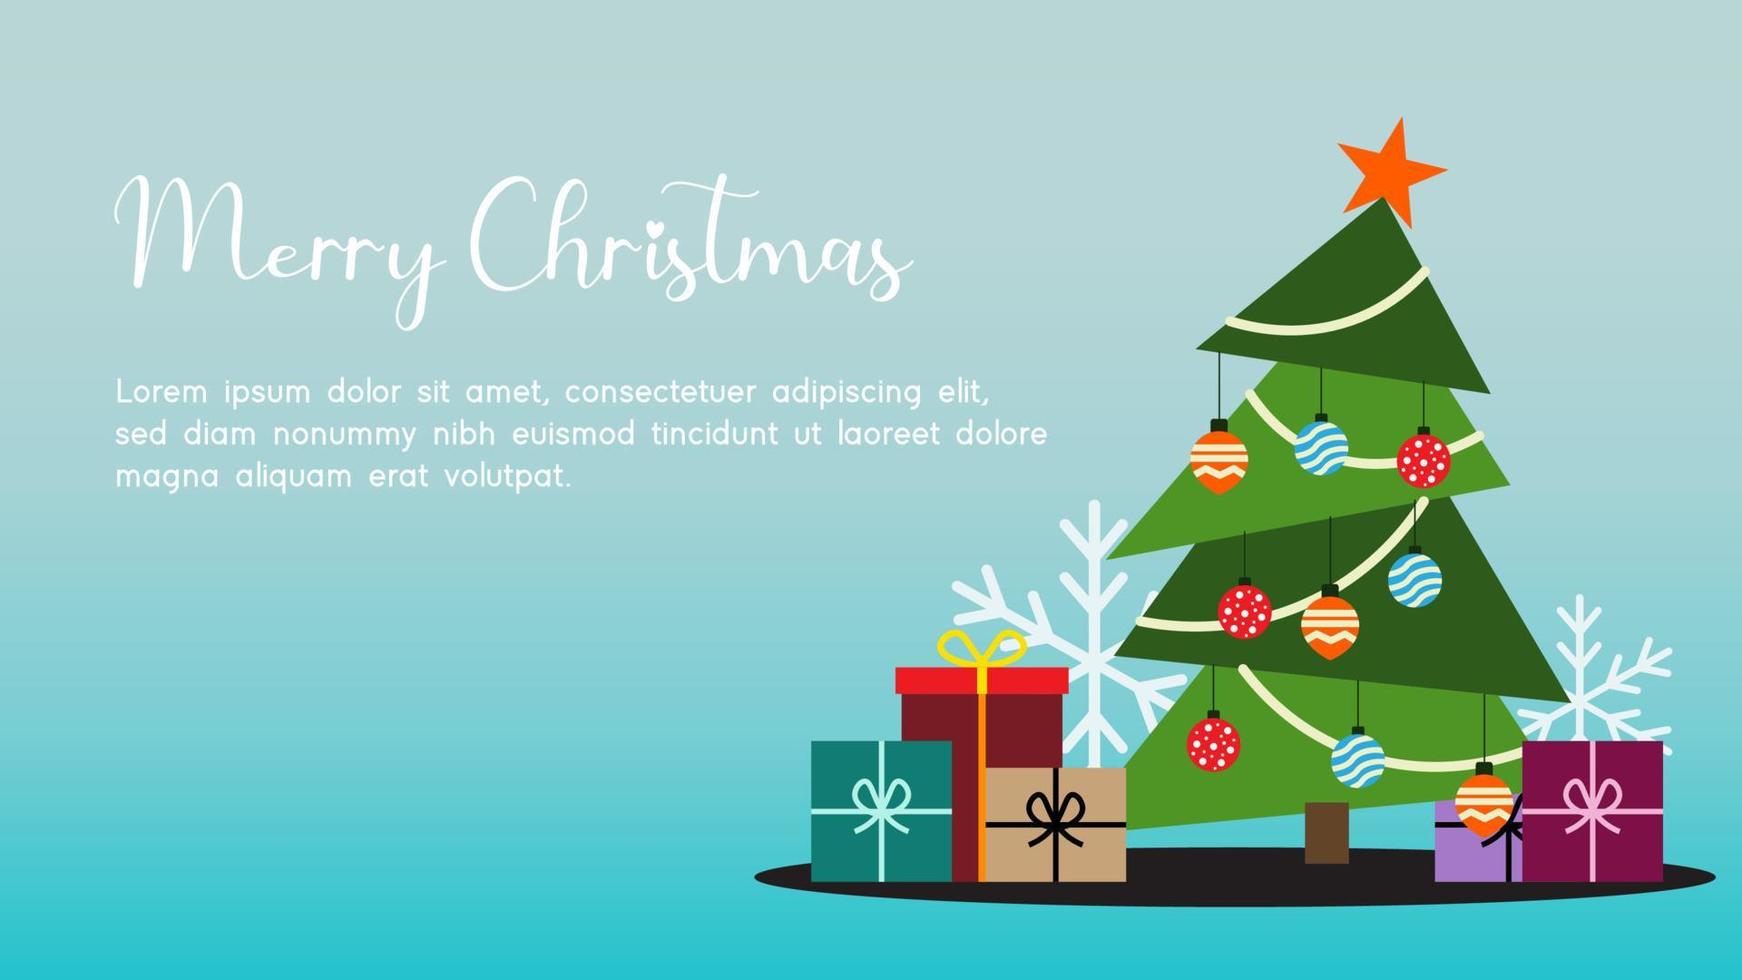 Christmas banner illustration, pine tree with gift box, design template for banner, frame, header, background for greeting card design. Vector Illustration.